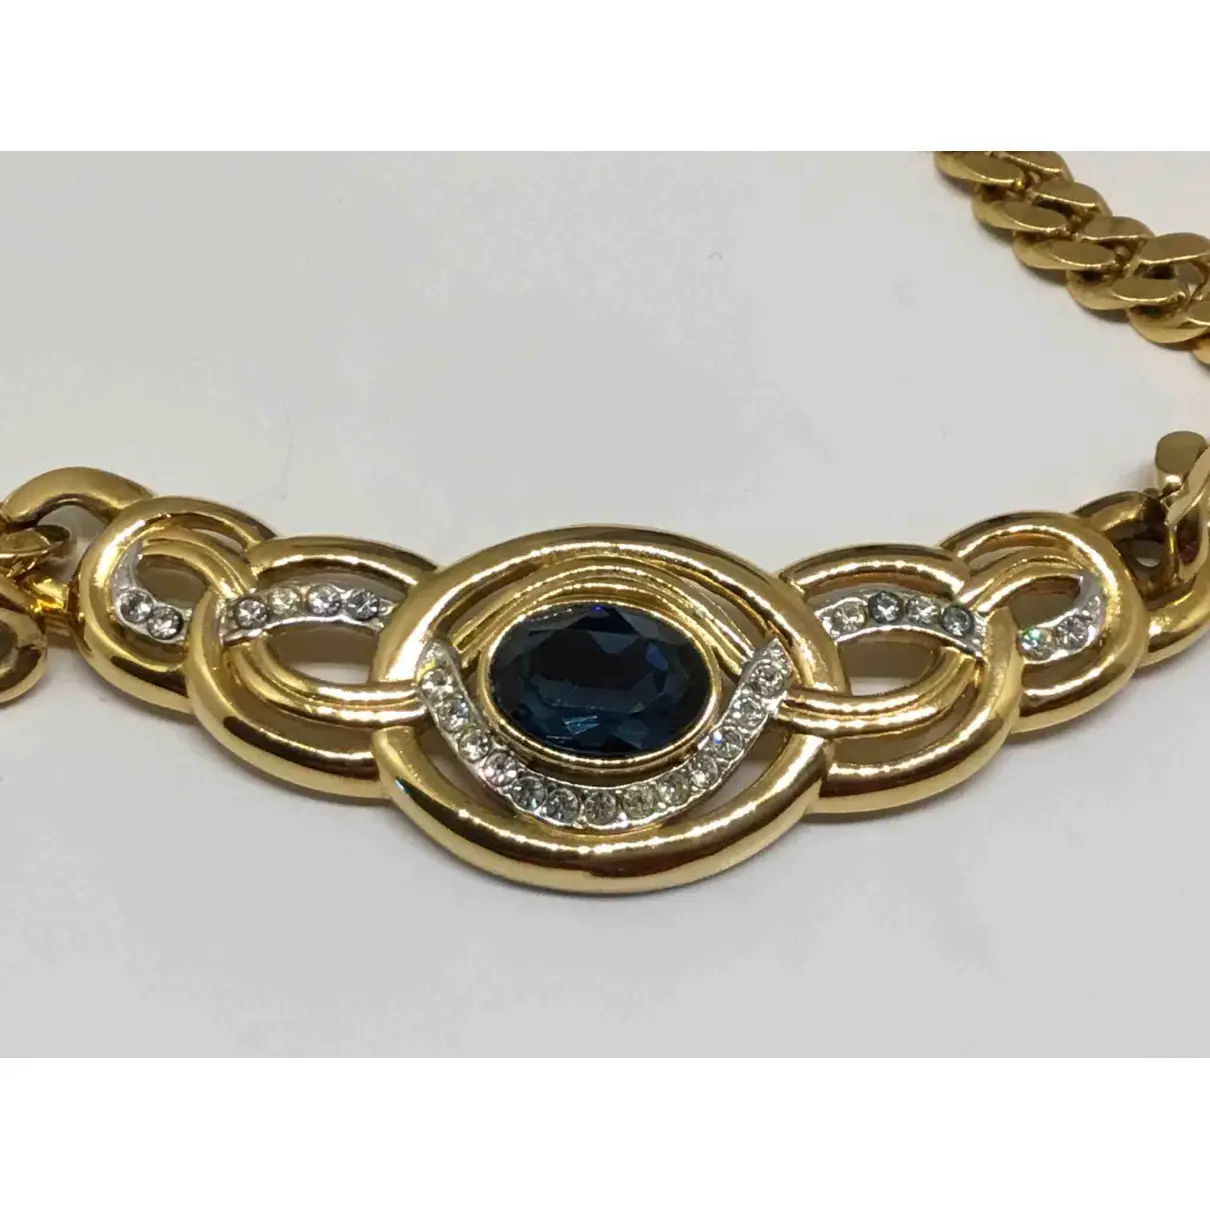 Buy Lanvin Necklace online - Vintage